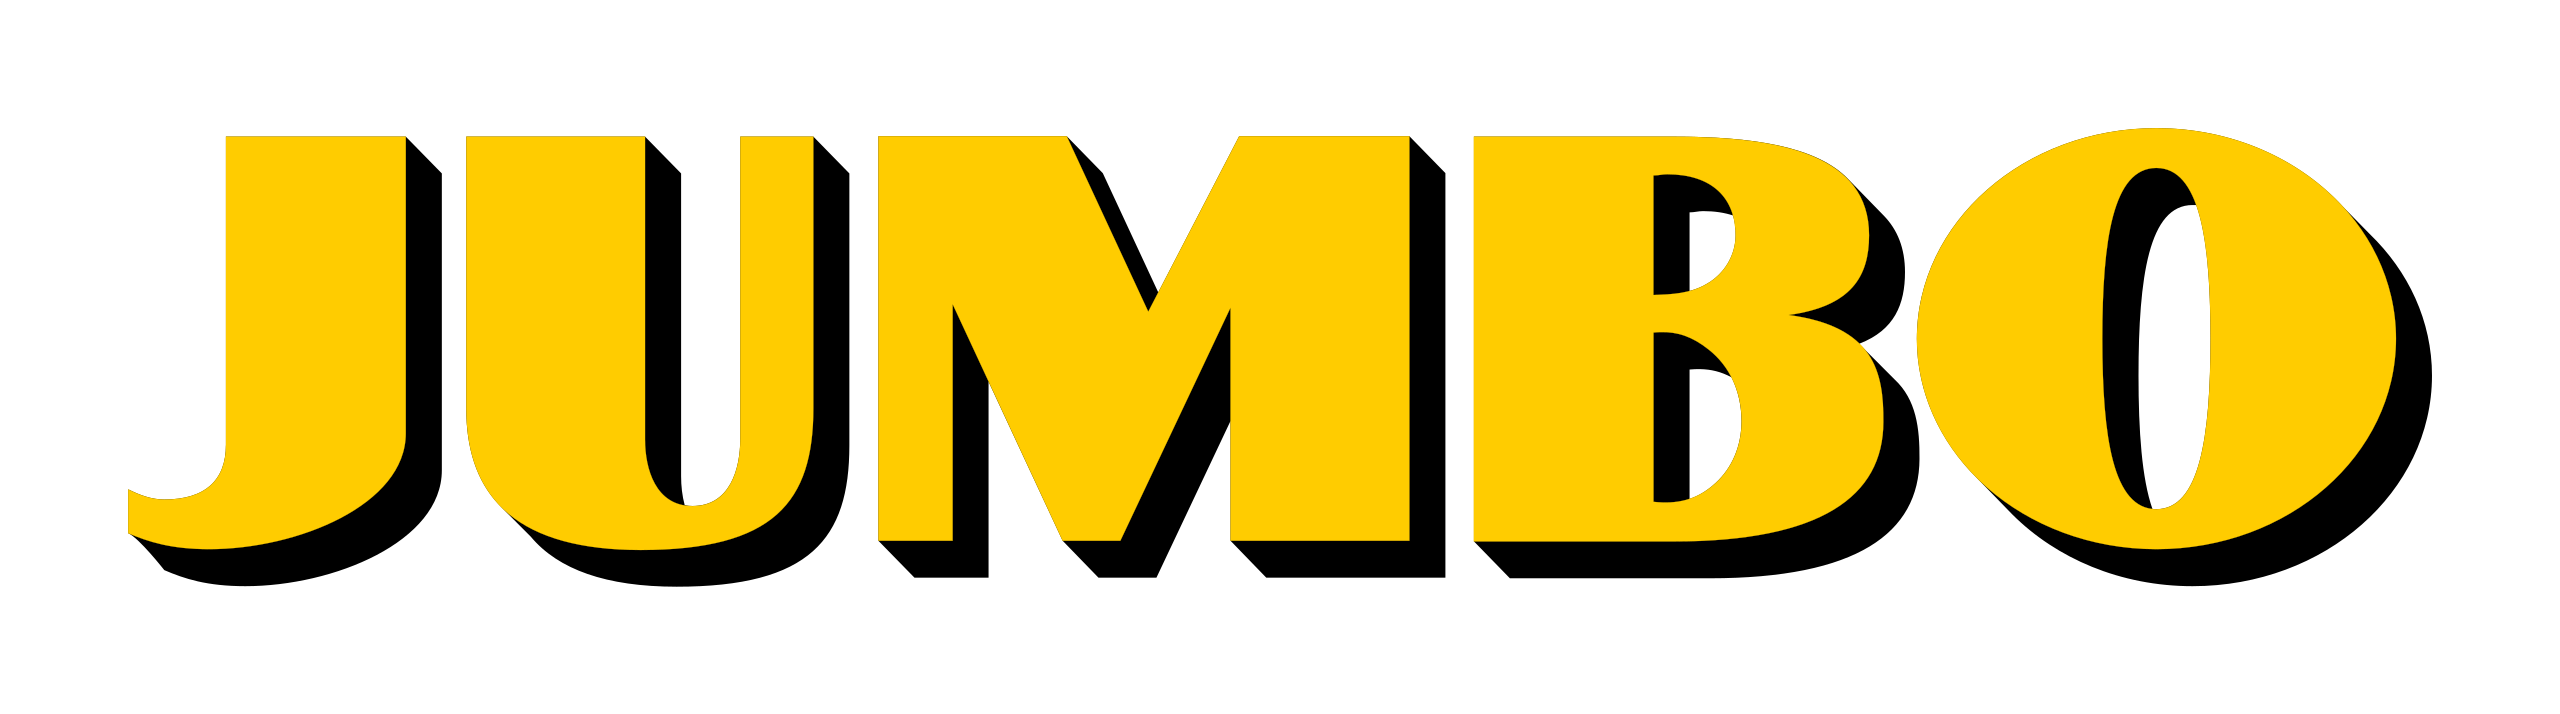 Jumbo_Logo.svg